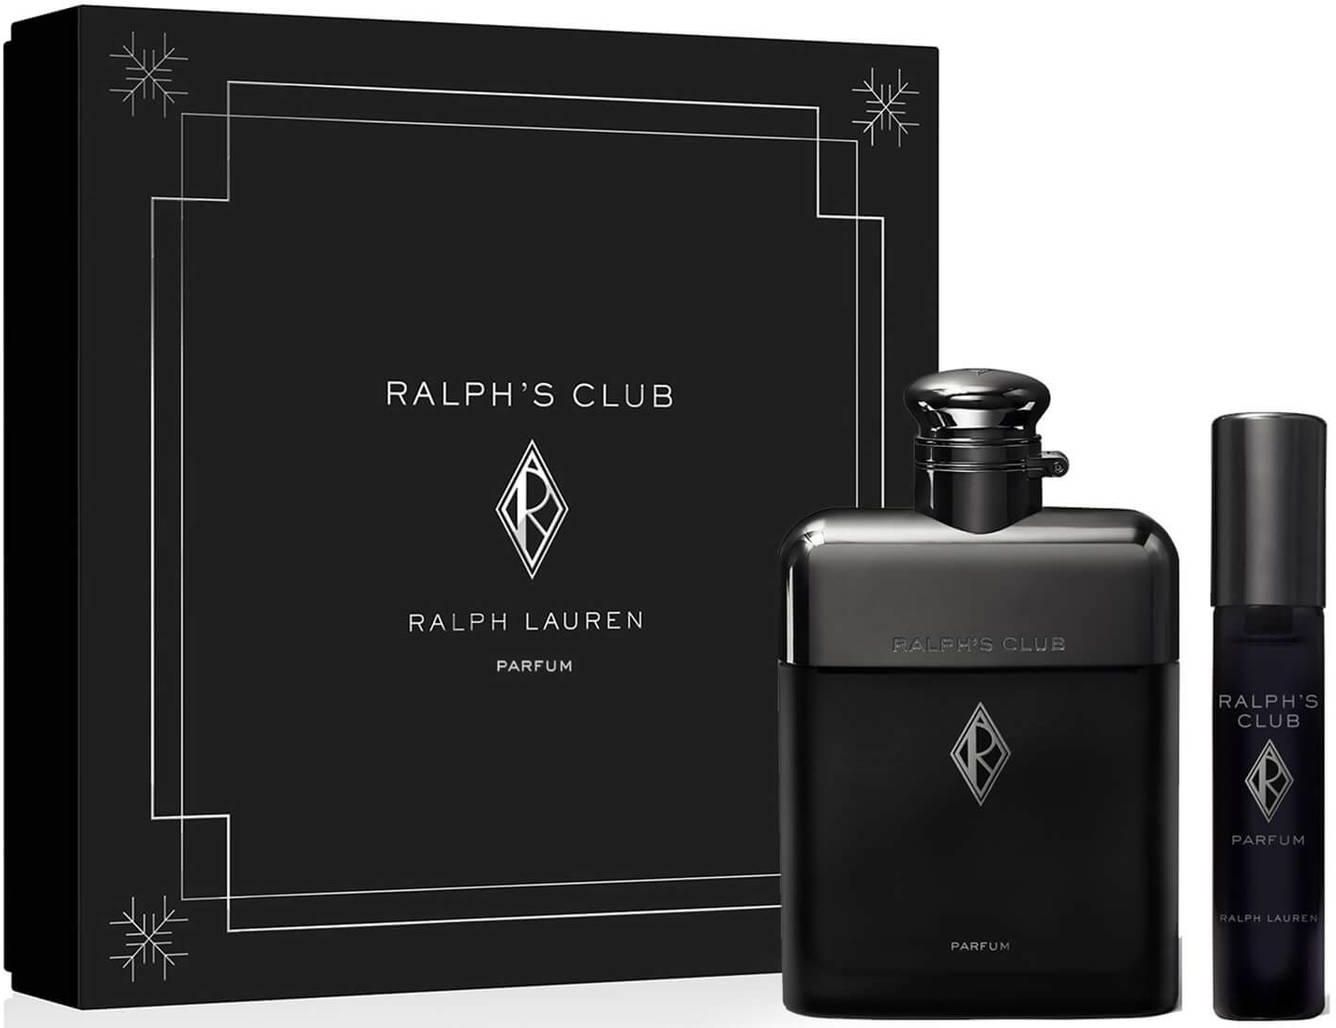 Ralph Lauren Ralph's Club Parfum 100ml and Travel Size 10ml